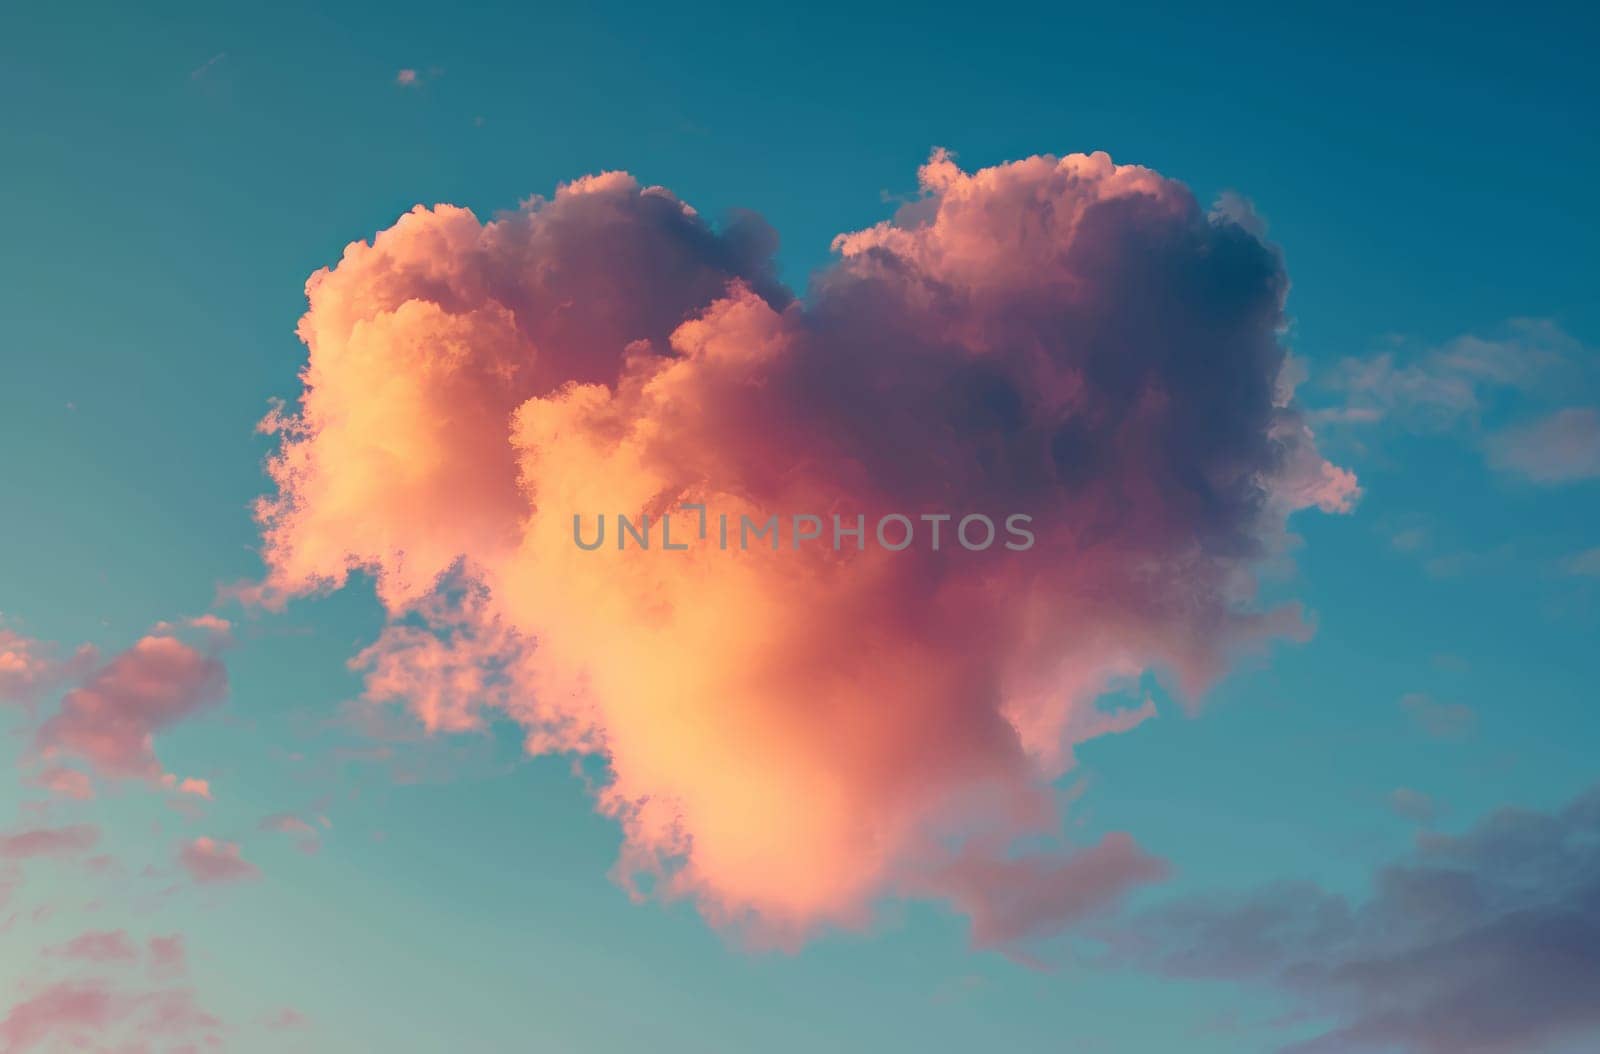 Heart-Shaped Cloud in the Sky by gcm